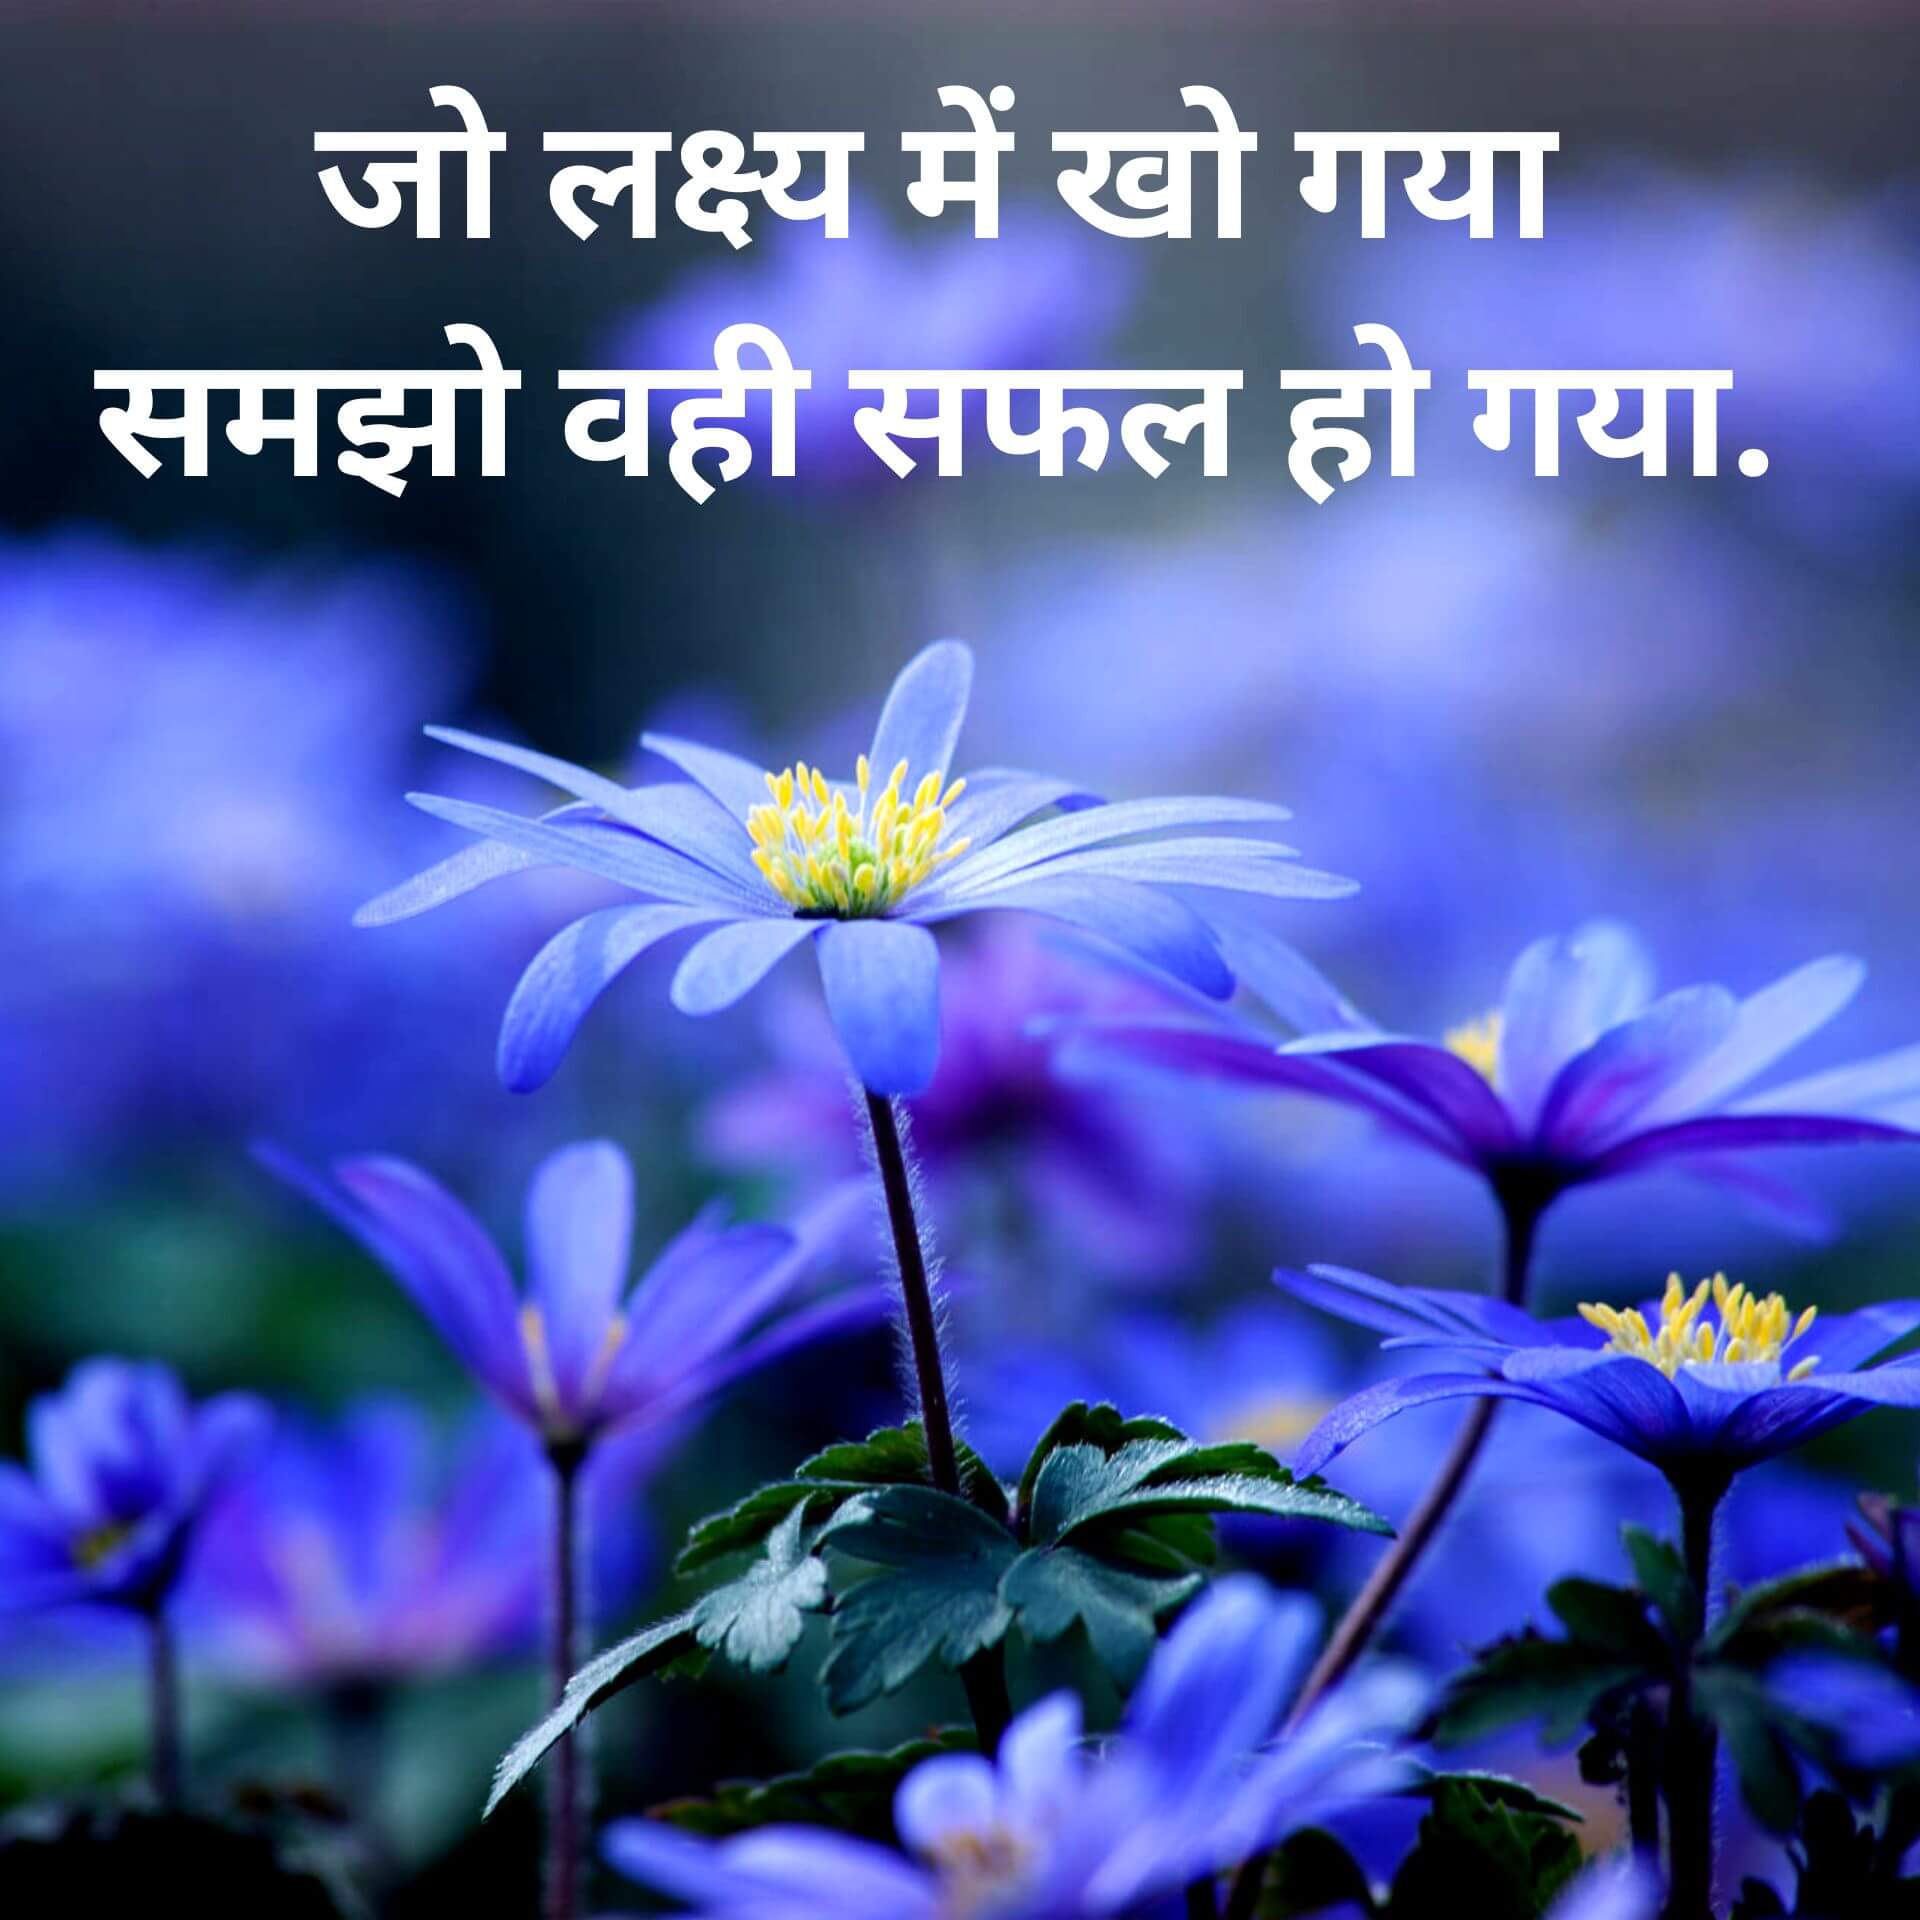 Hindi Motivational Quotes photo New Download